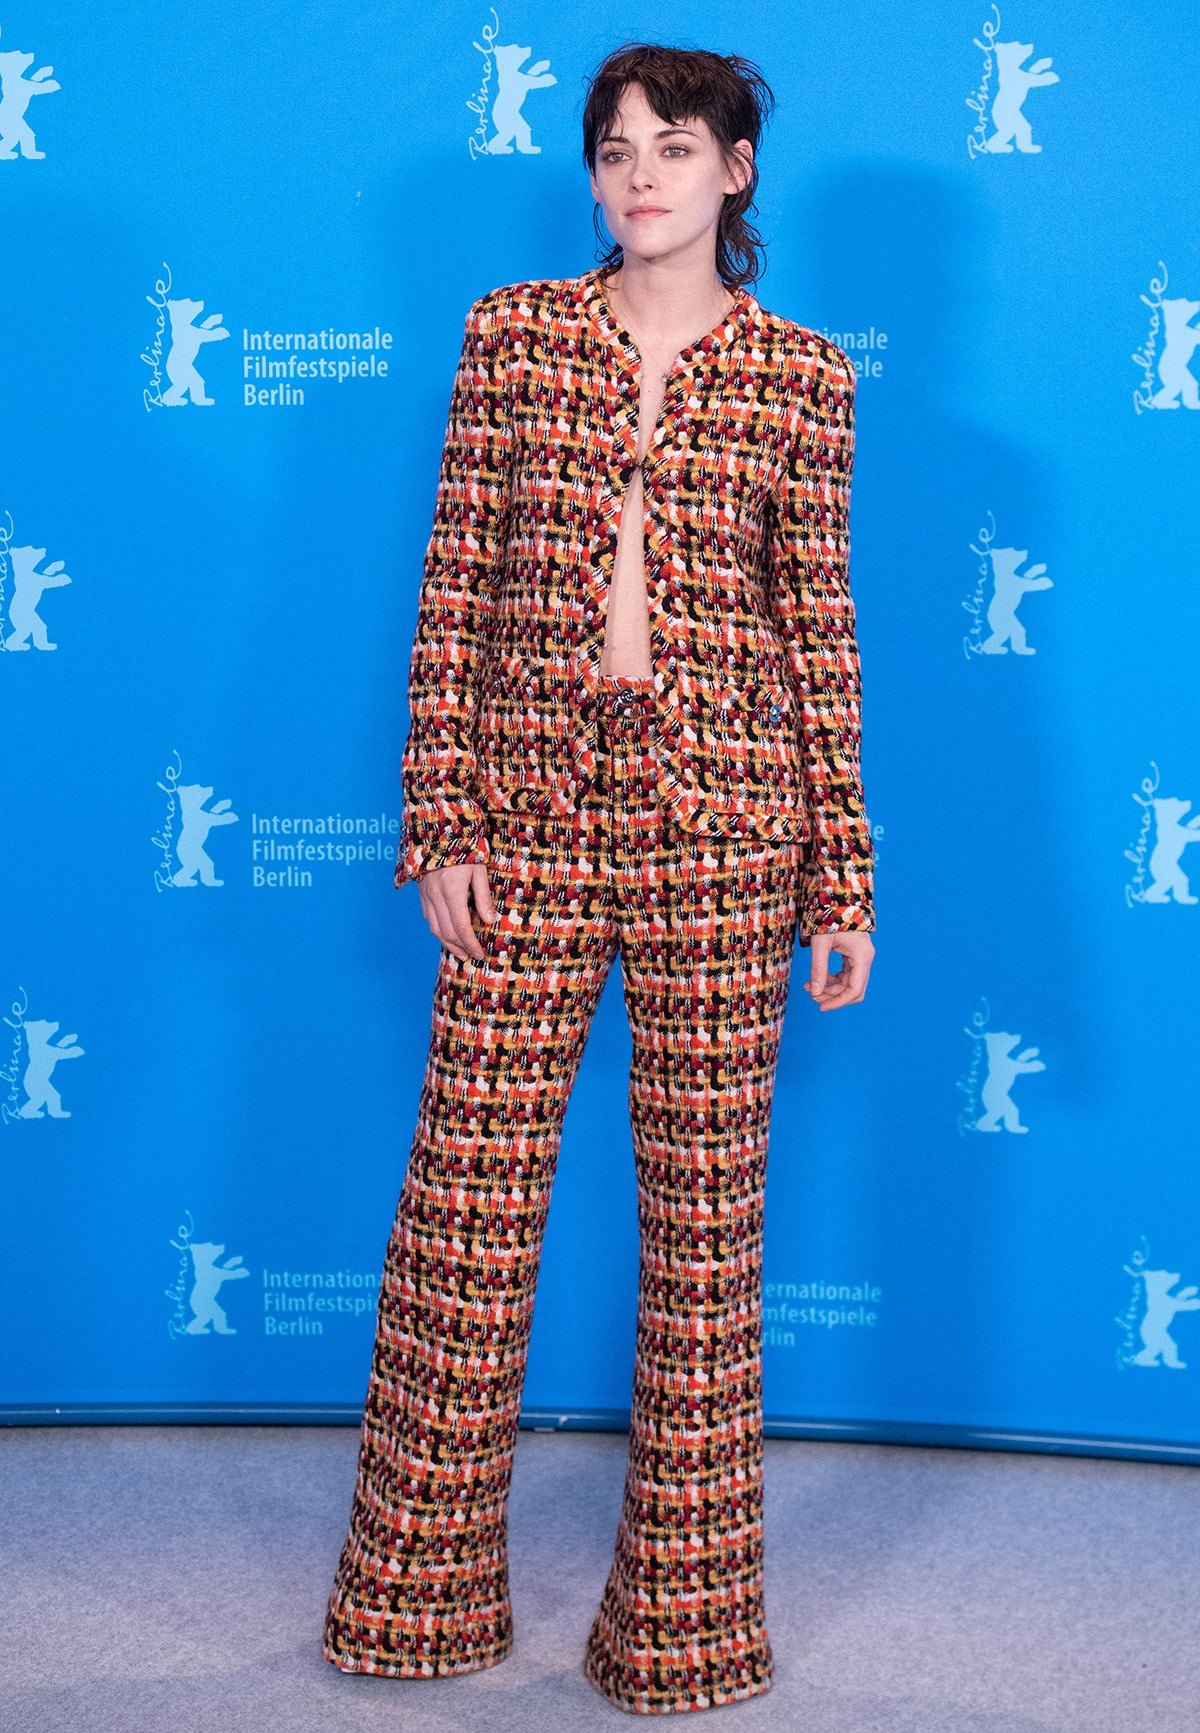 Kristen Stewart brings her A-game to the Berlin International Film Festival 2023 red carpet on February 16, 2023